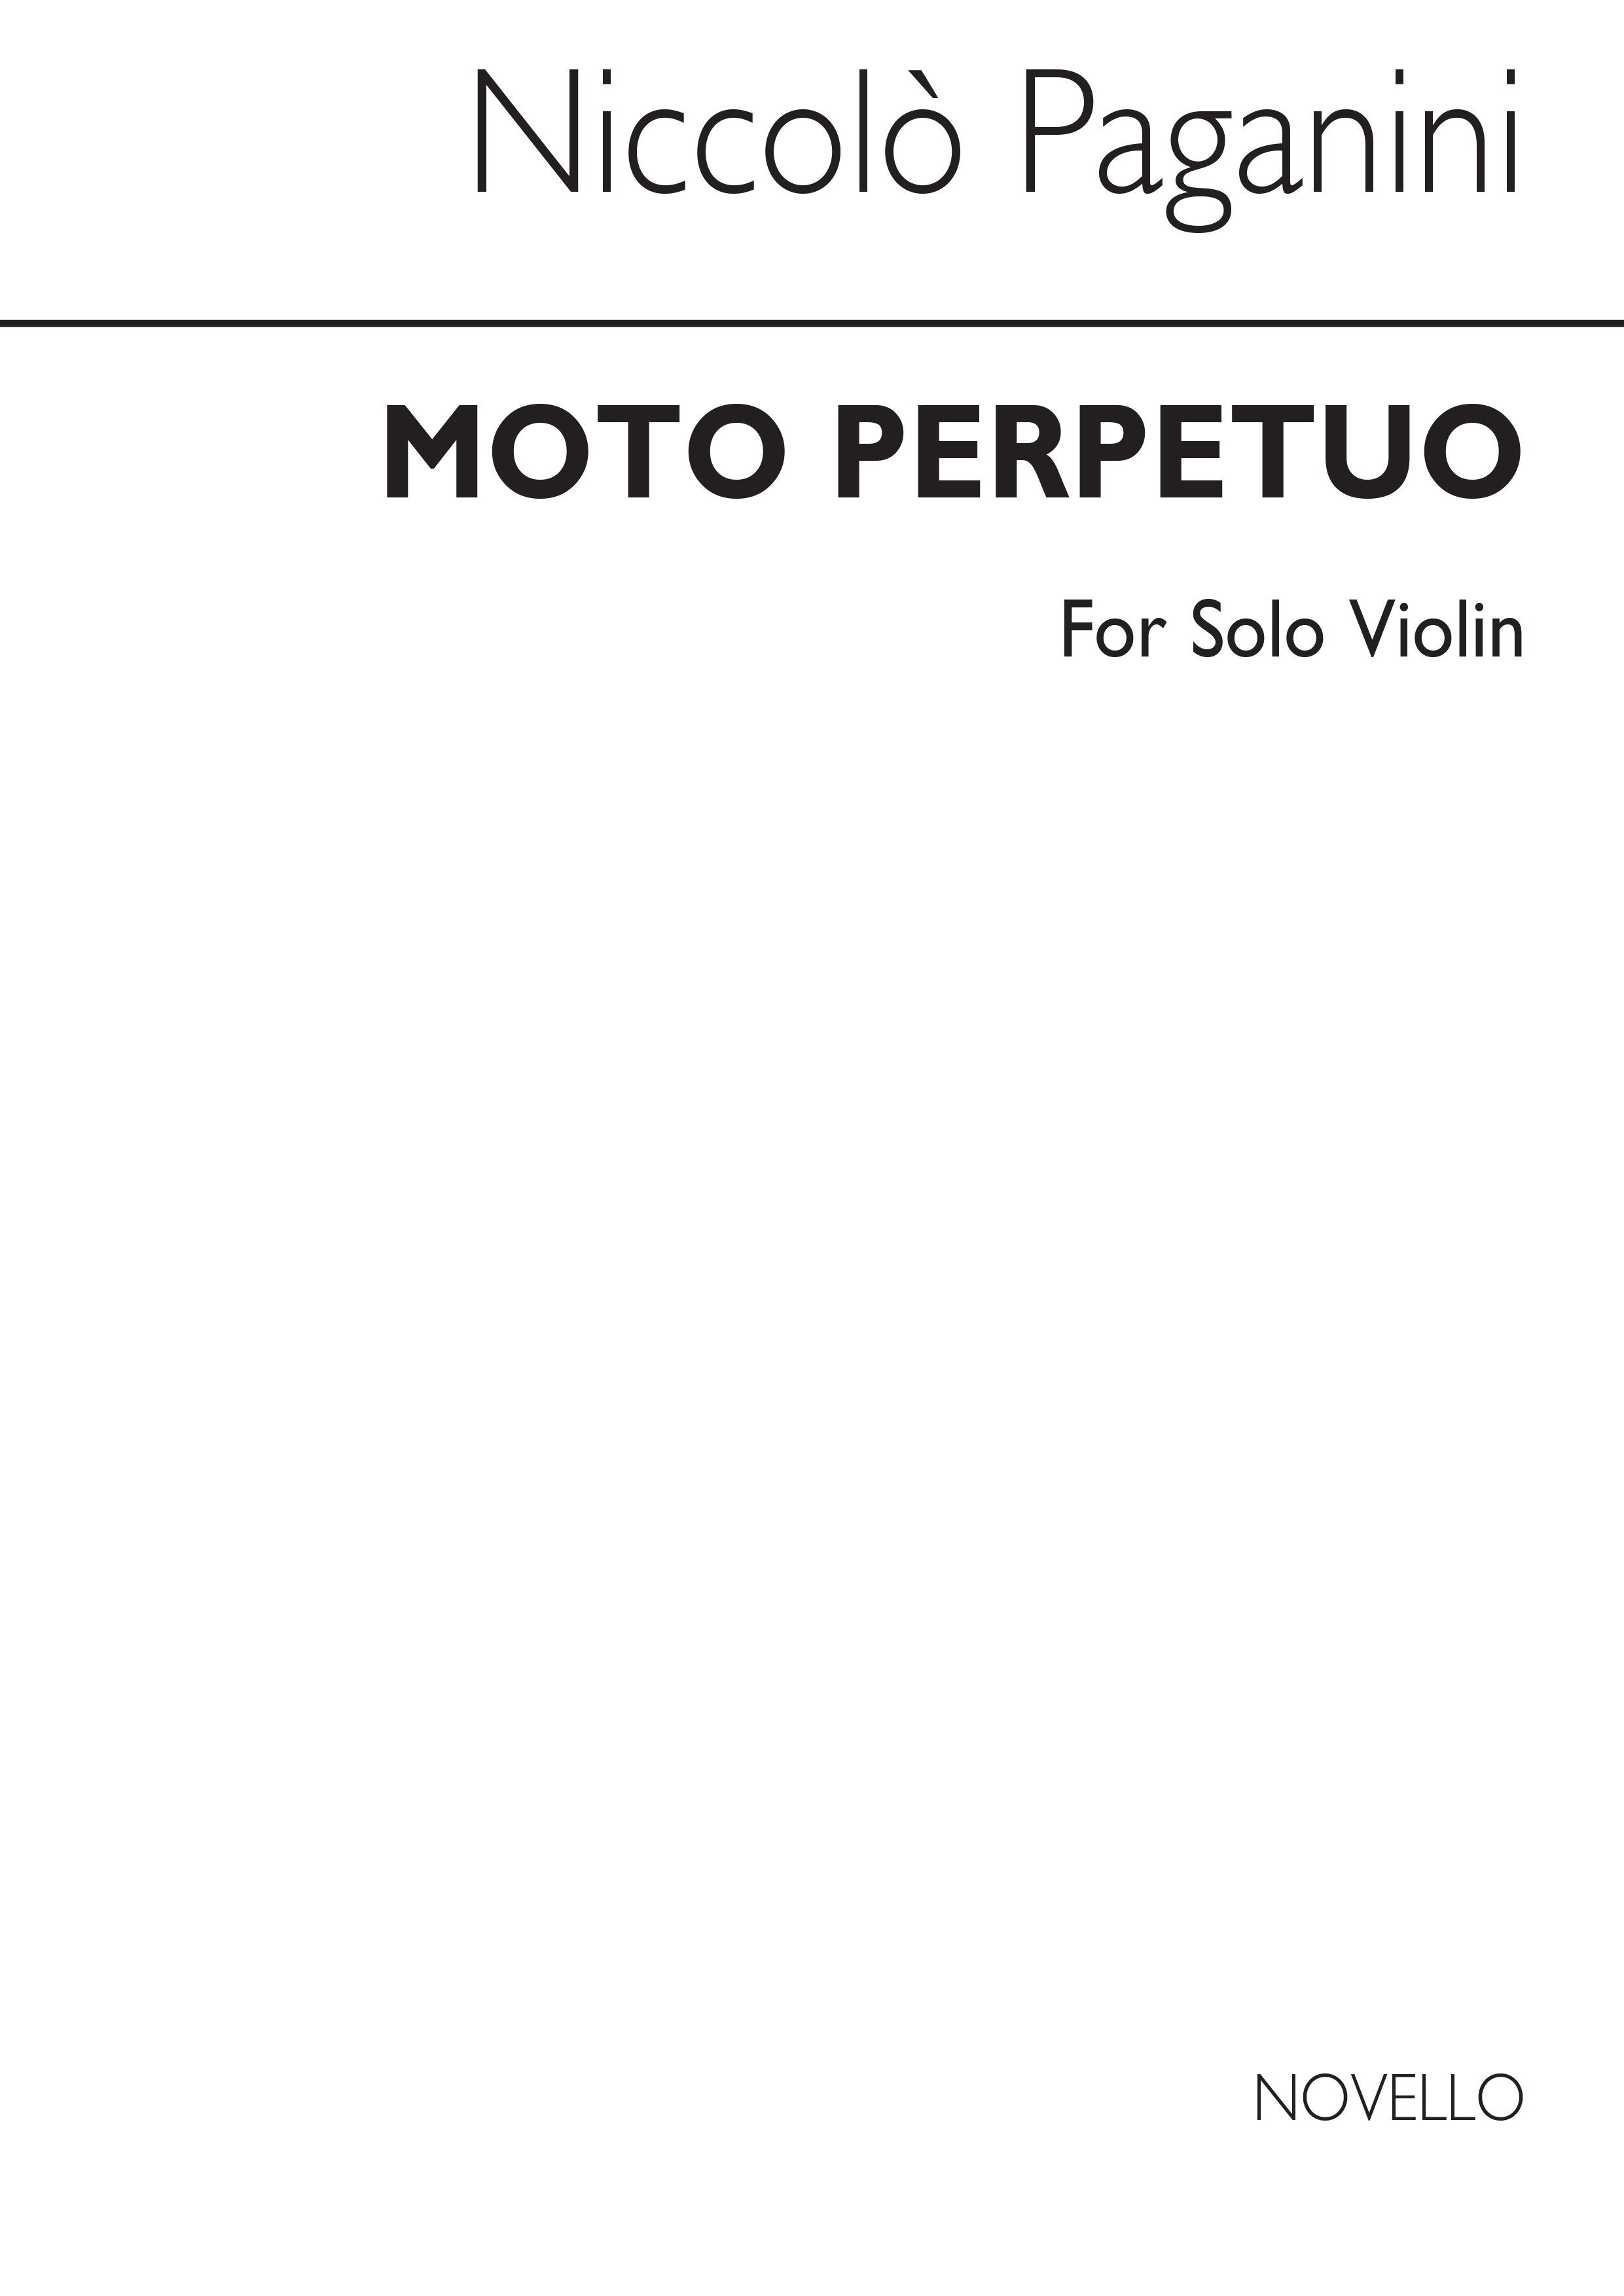 Nicolo Paganini: Moto Perpetuo Op.11 (Dounis)